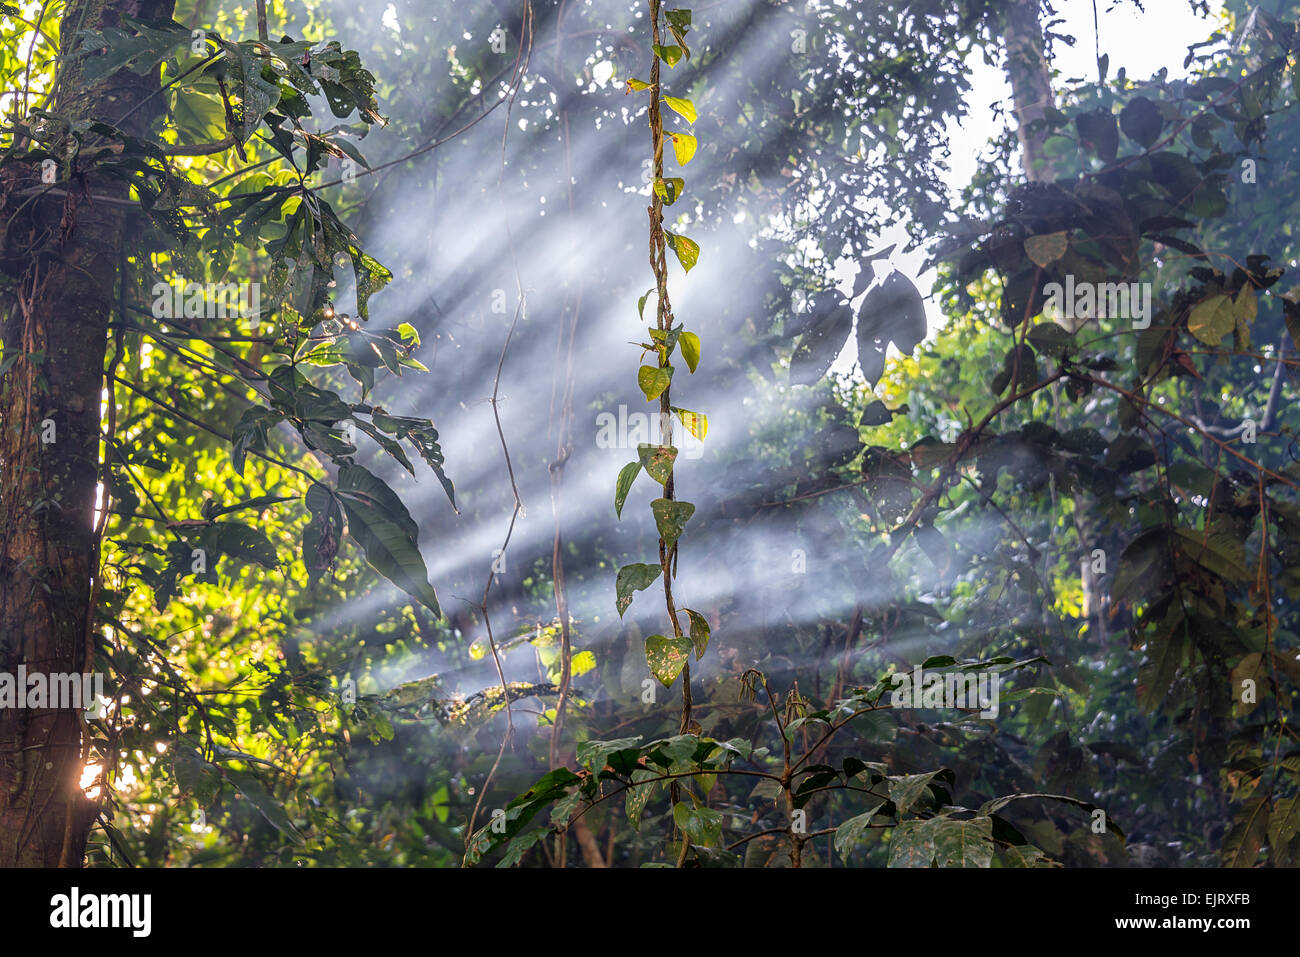 Beams of like passing through smoke in the Amazon Rainforest near Iquitos, Peru Stock Photo